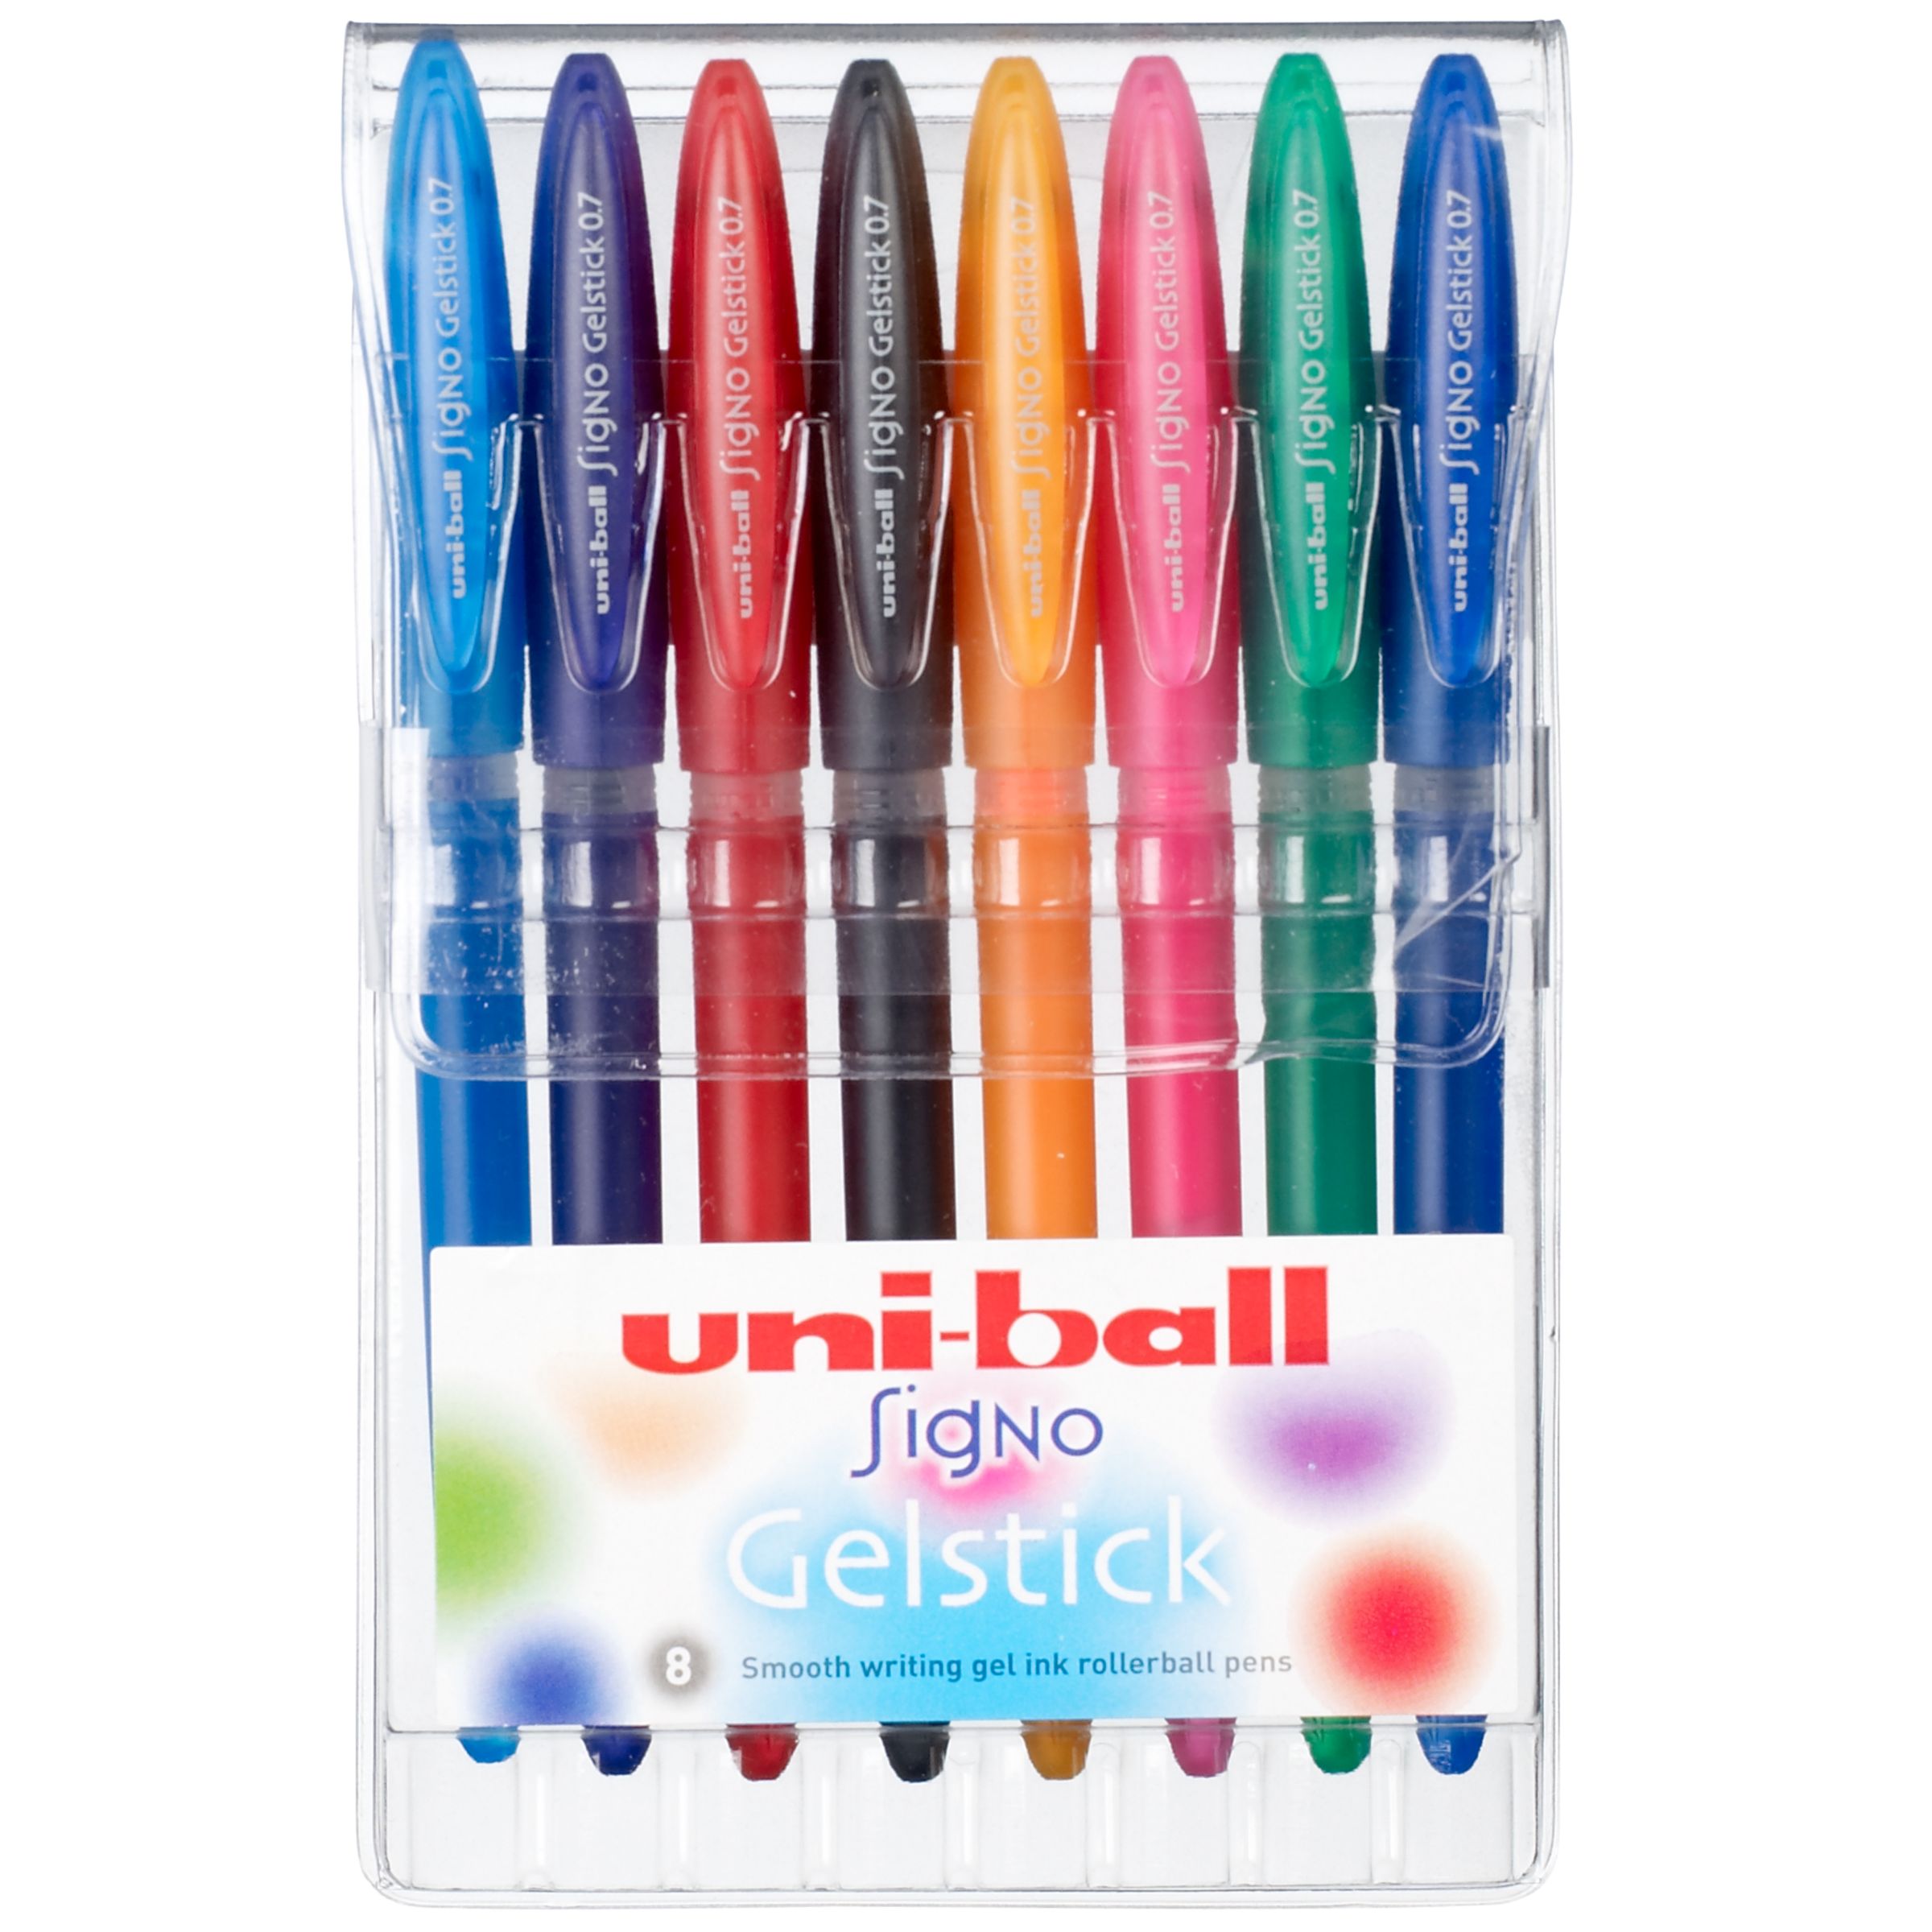 Uniball Signo Uniball Pens, Pack of 8 170065